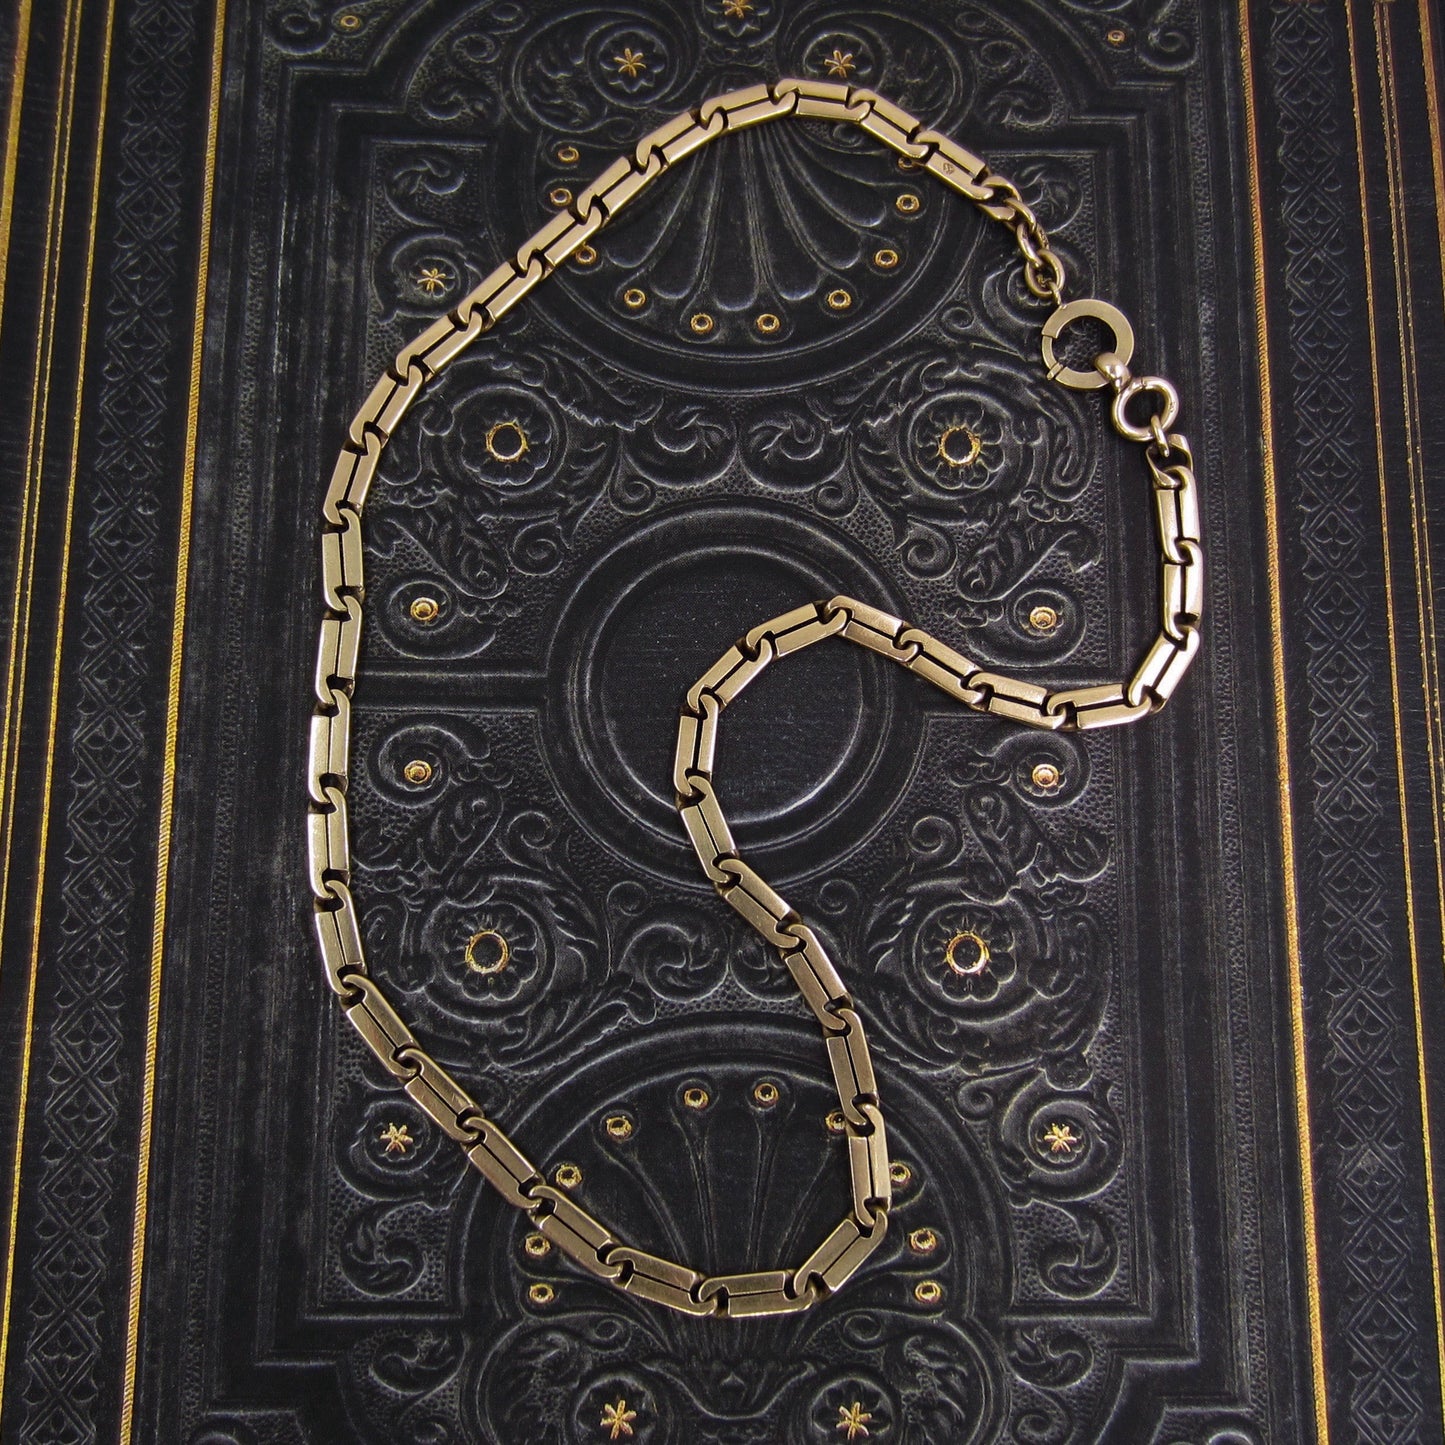 Vintage Link Chain 16.5” Necklace 14k c. 1970